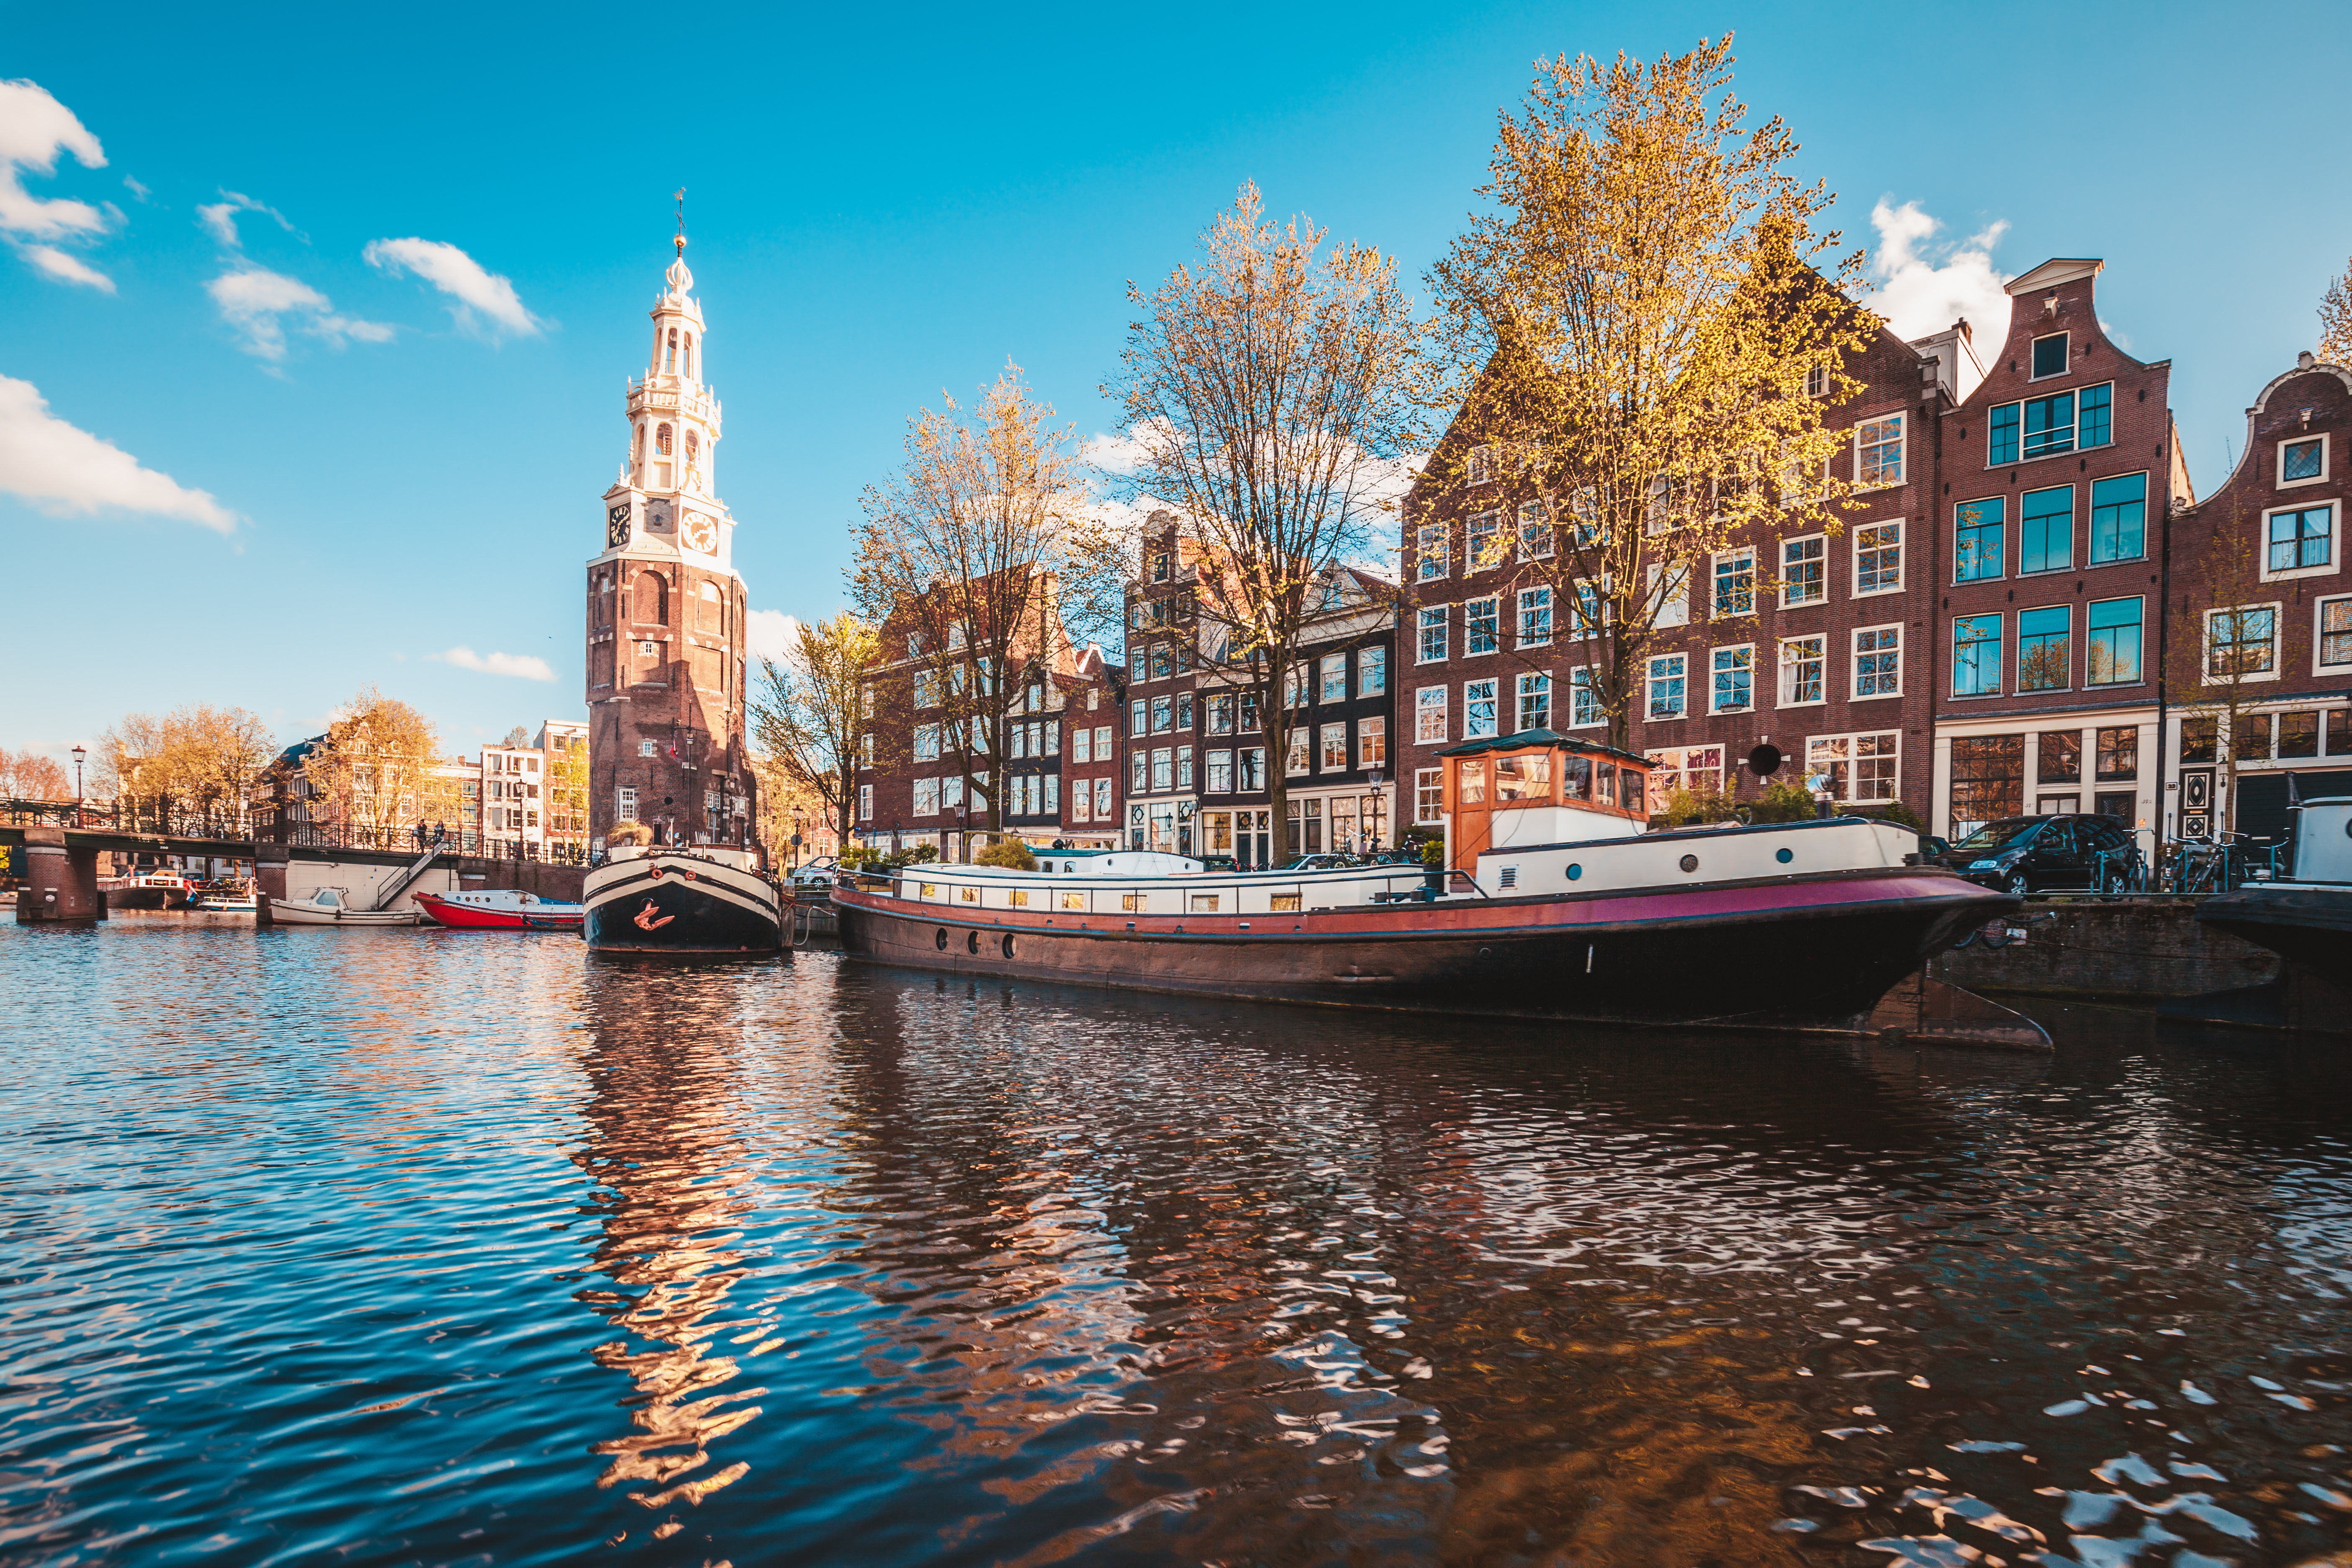 Jordaan canals in Amsterdam